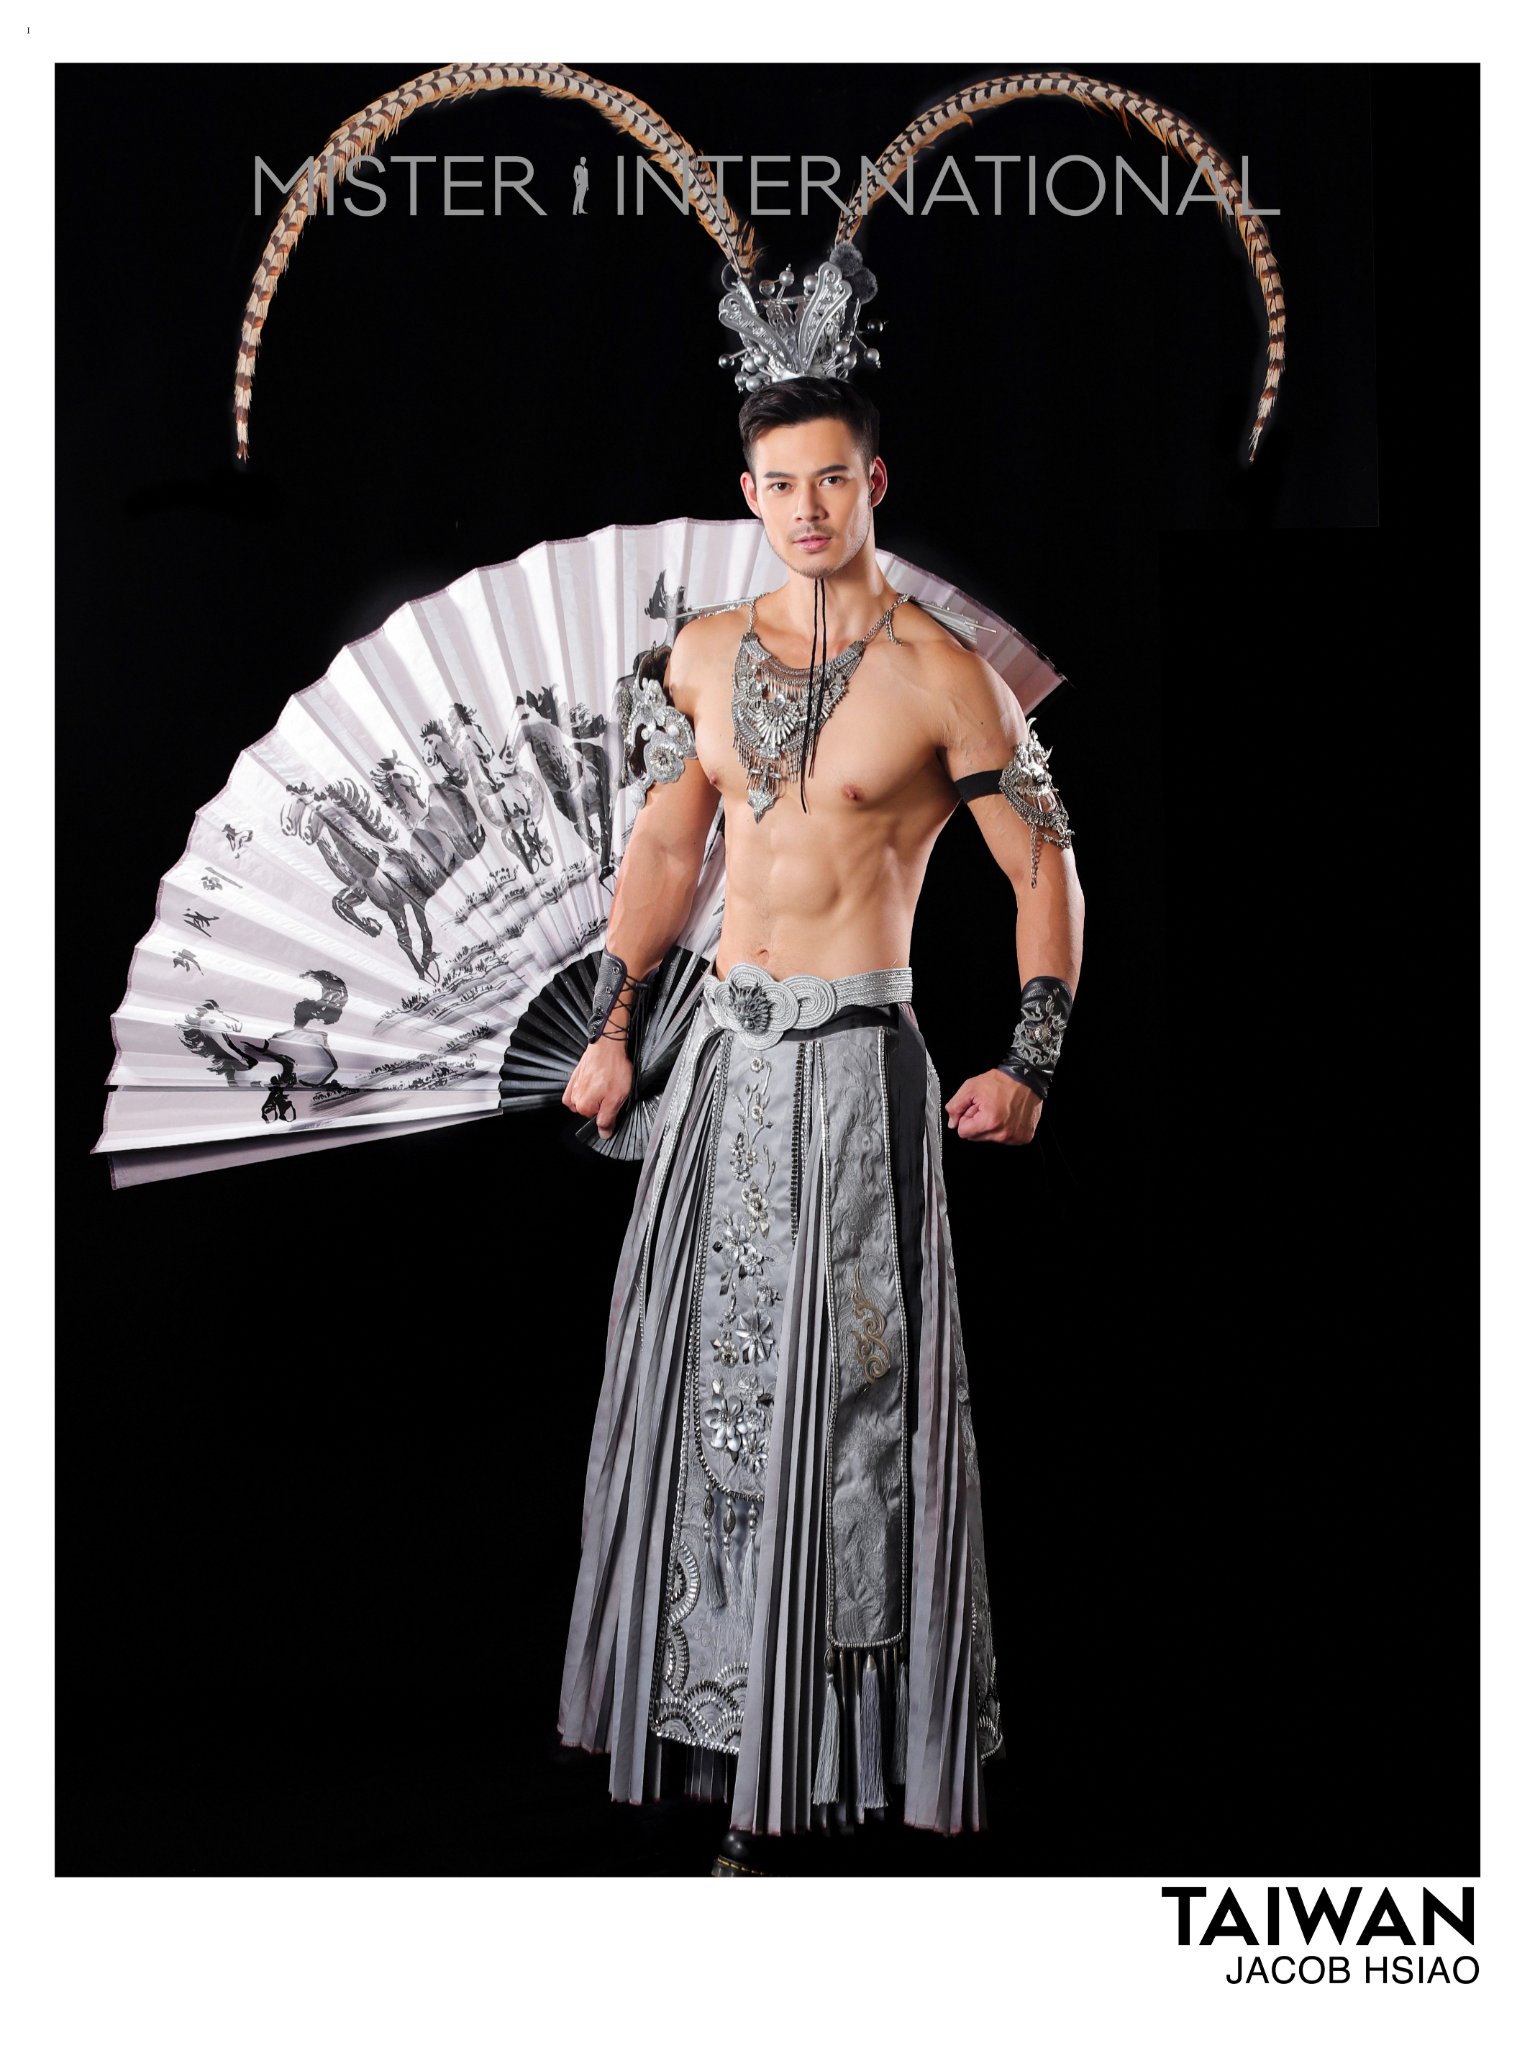 Mister International 2022 TAIWAN Jacob Hsiao National Costume Shot by Raymond Saldana